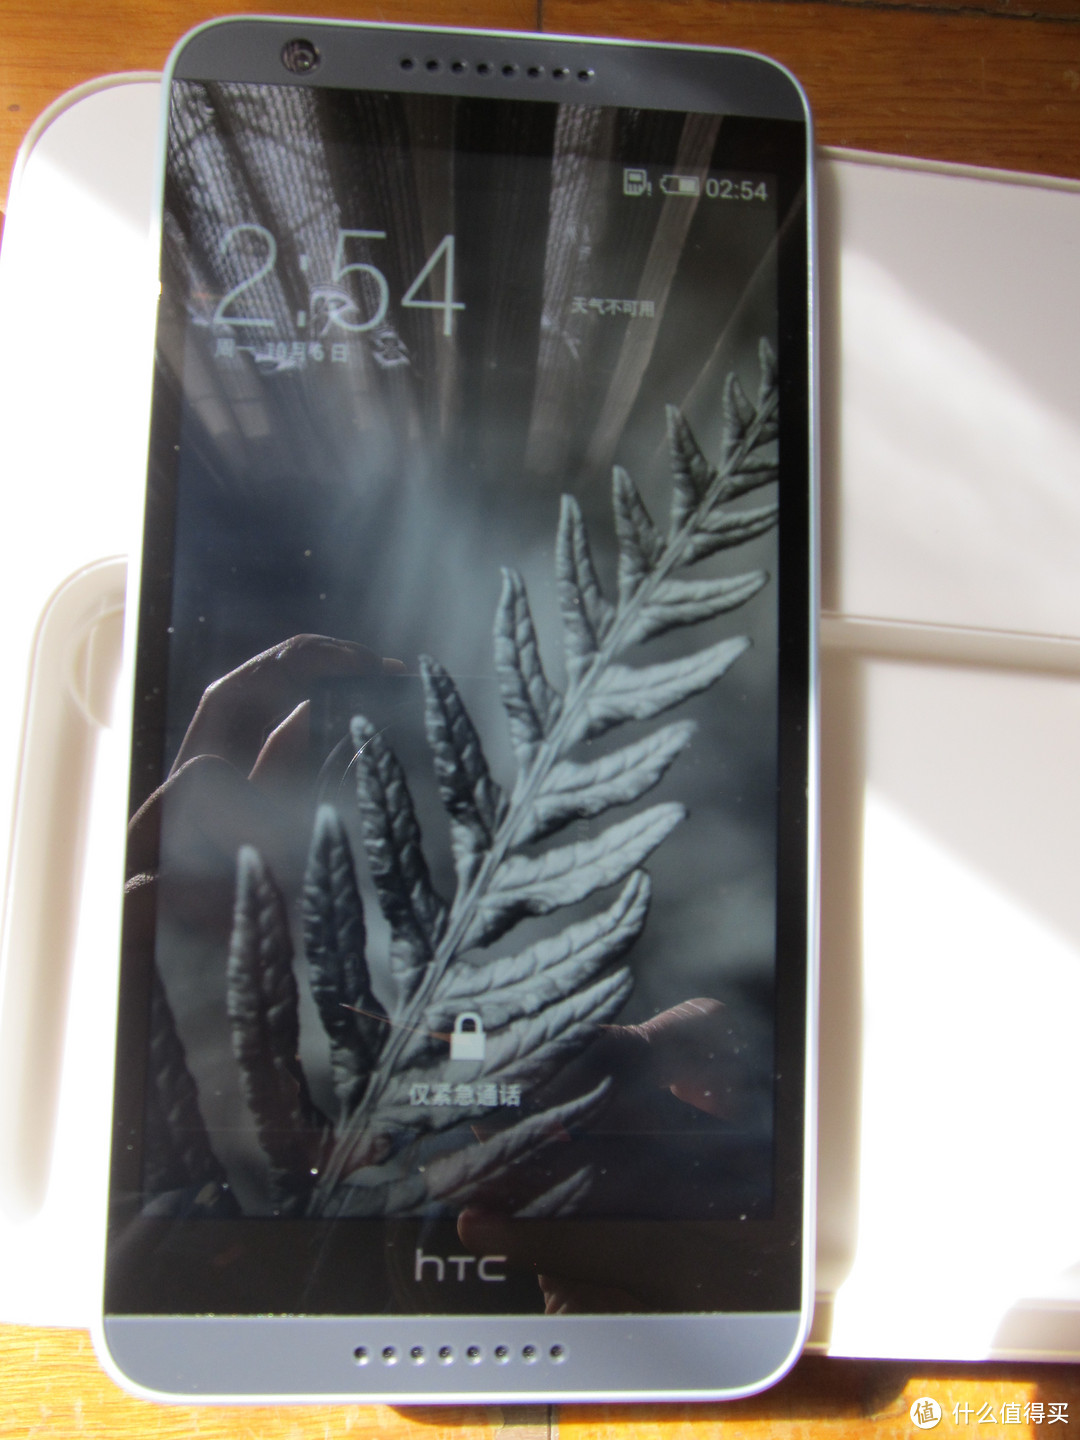 HTC Desire 820u 4G智能手机